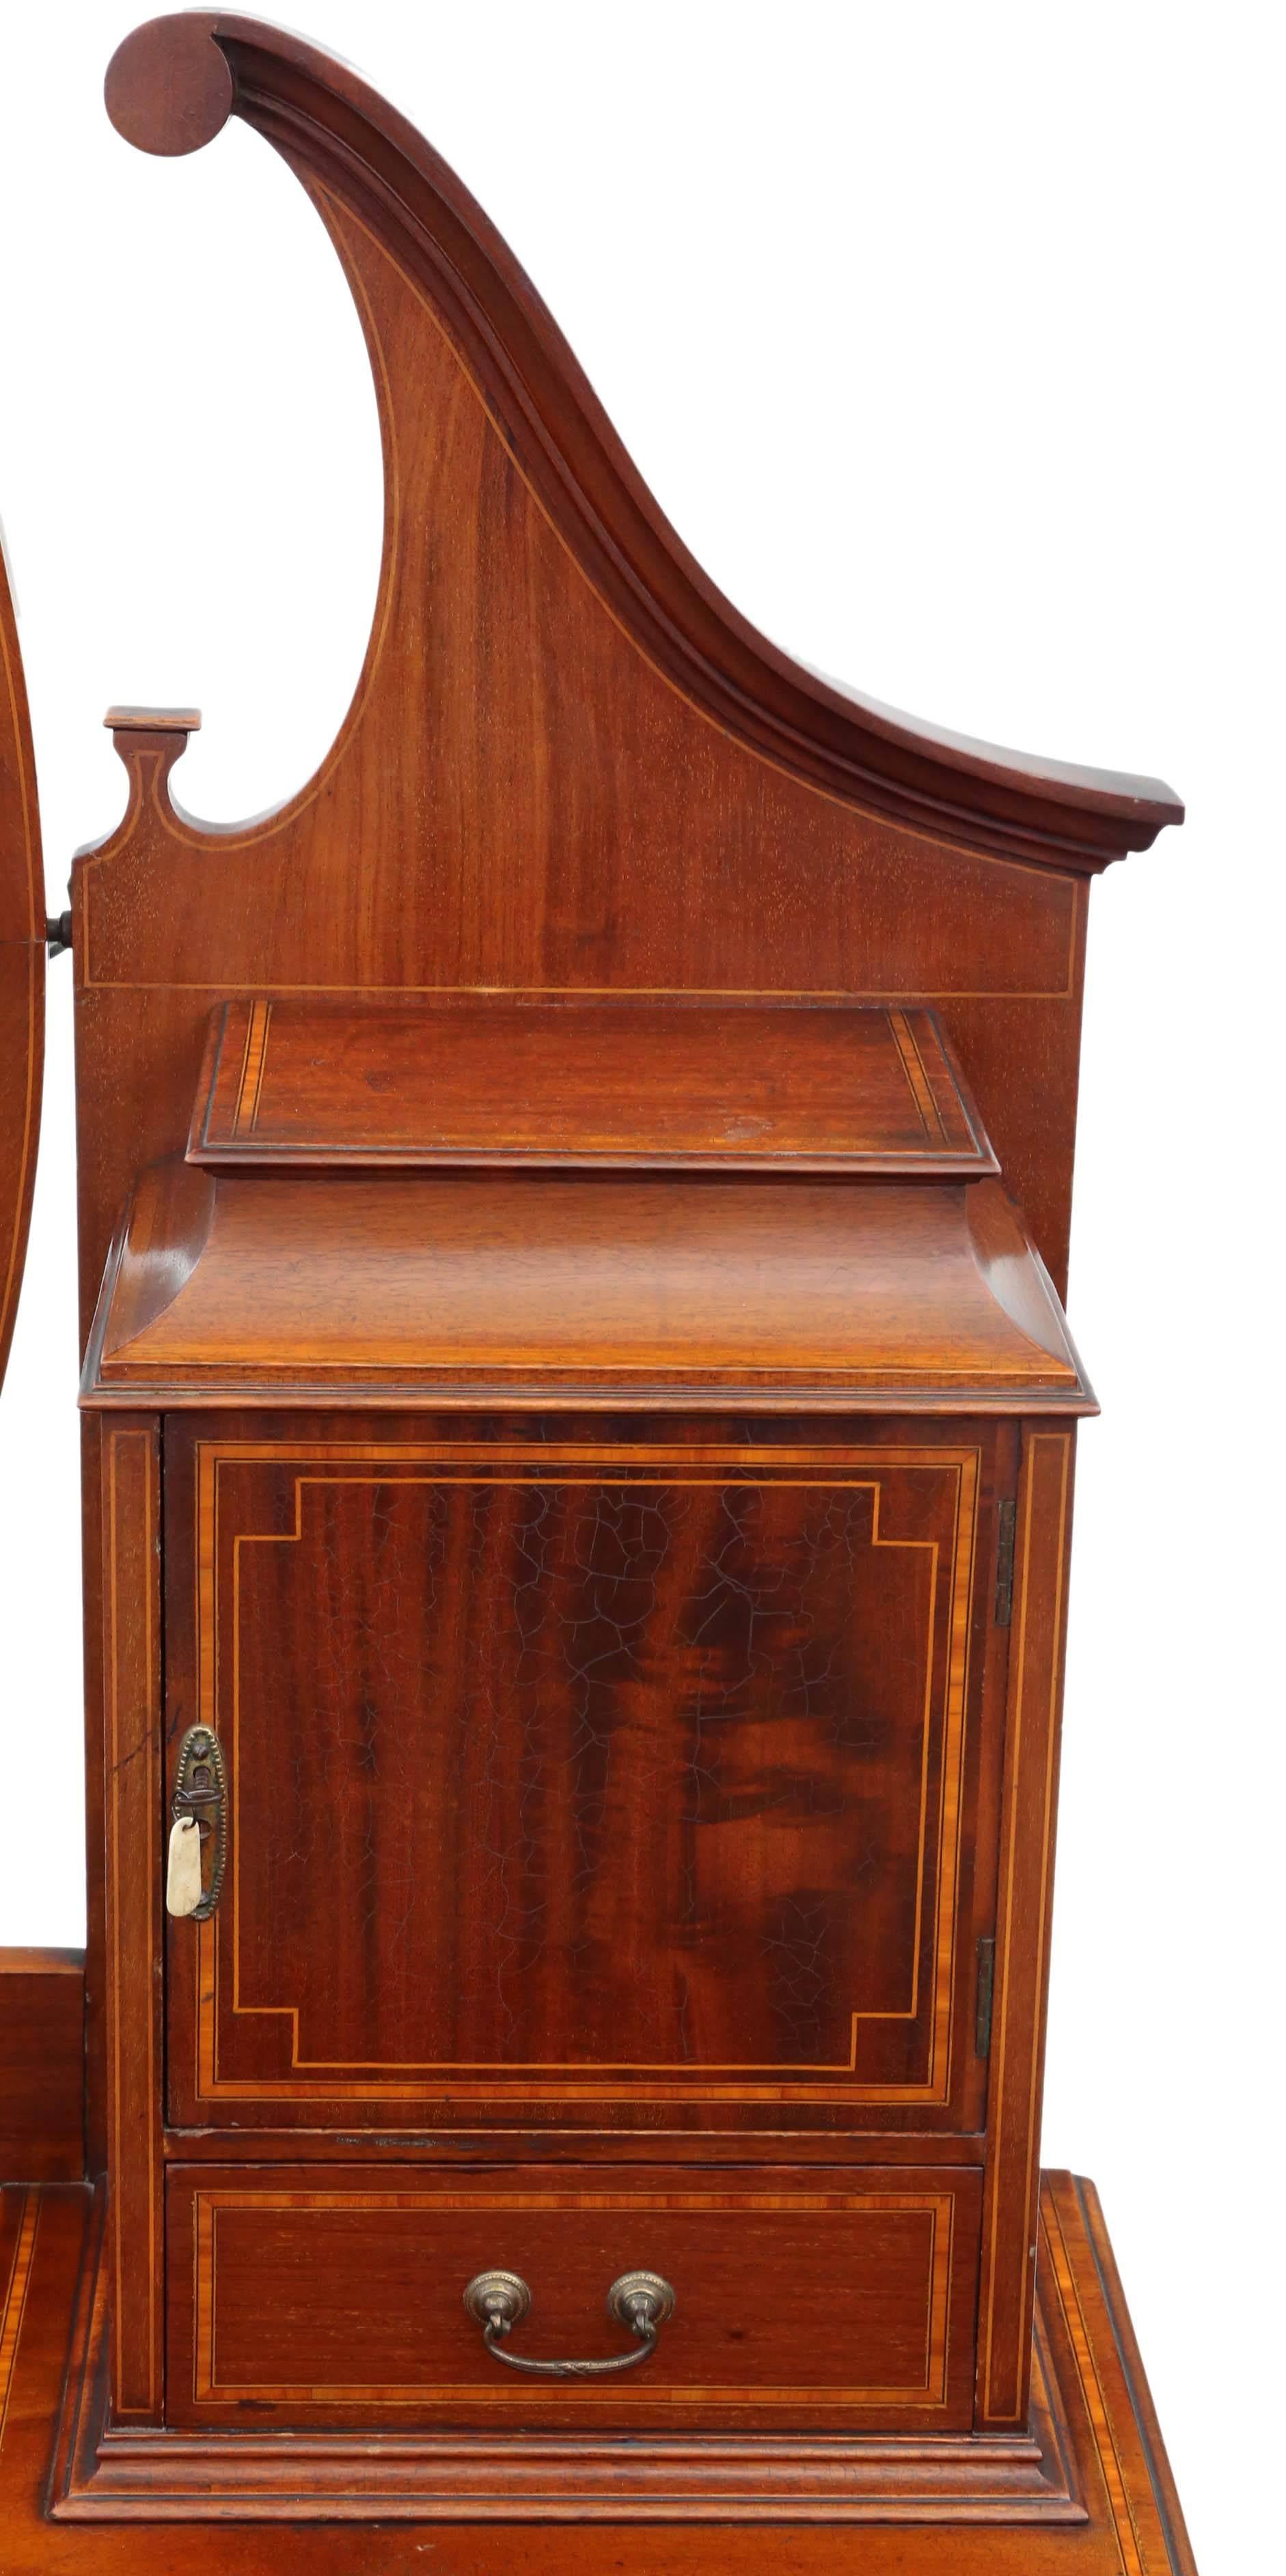 British Antique Quality Large Edwardian Inlaid Mahogany Dressing Table For Sale